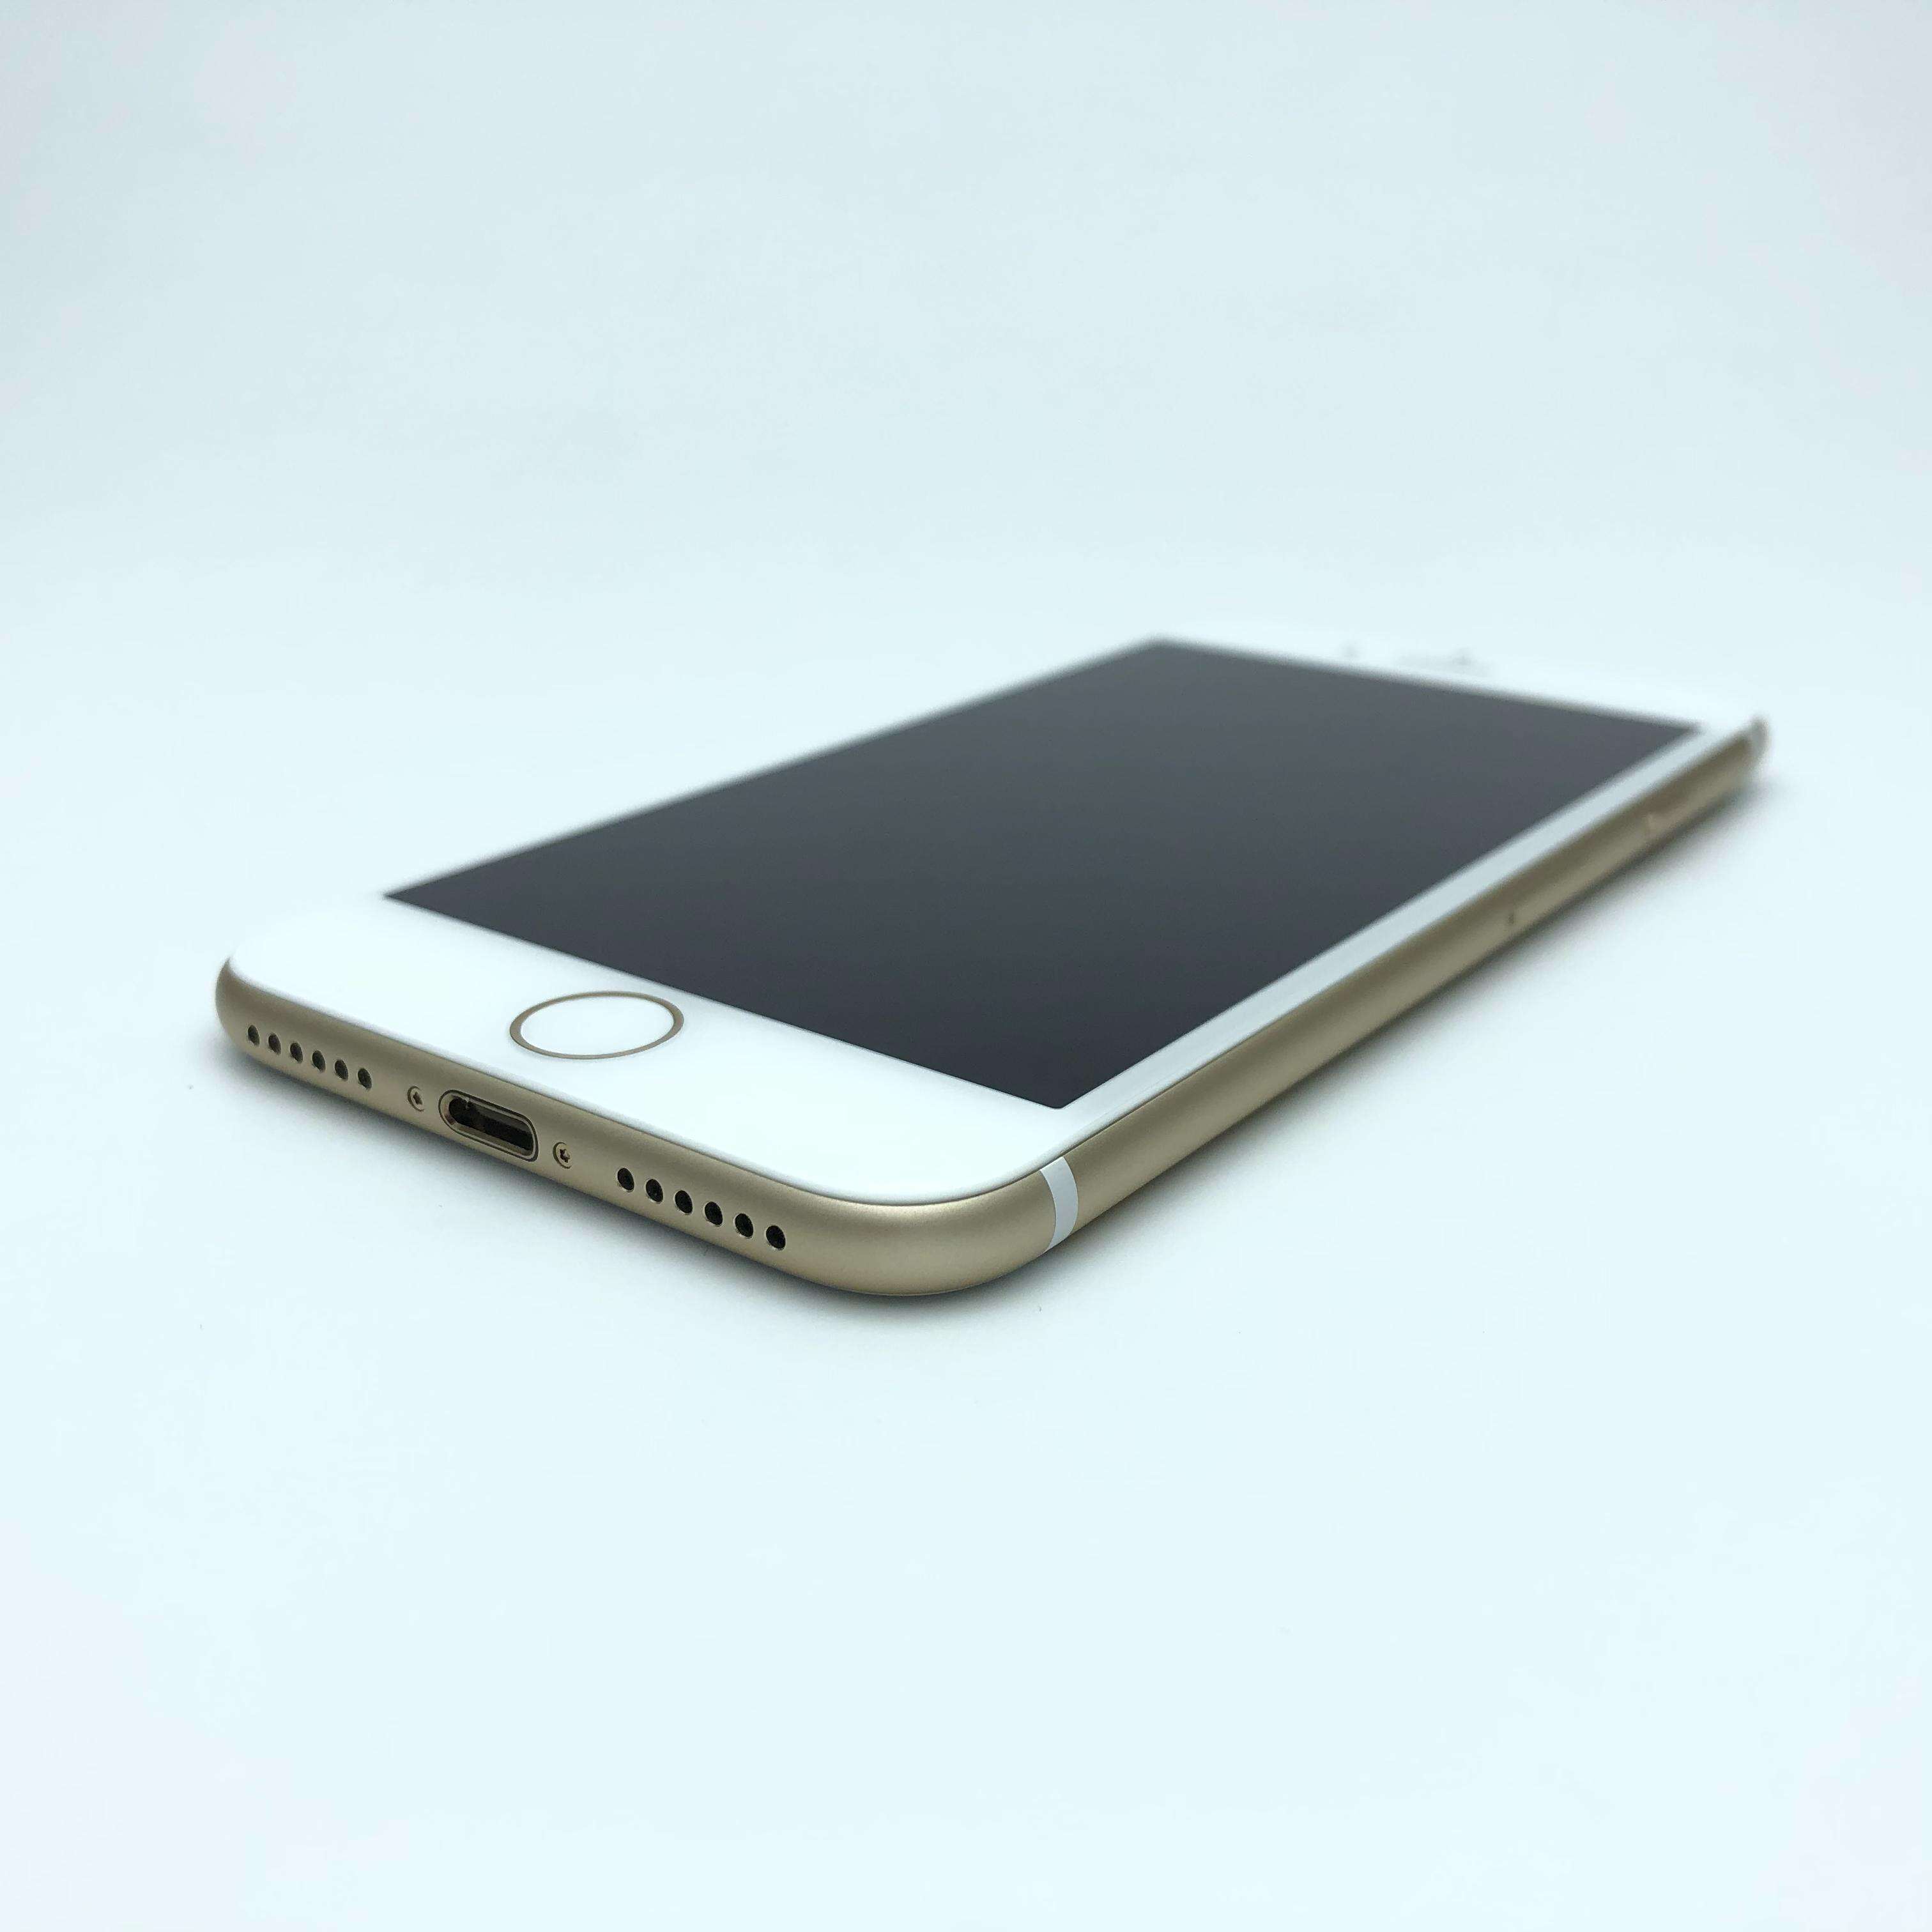 iPhone 7 32G 国行全网版 金色